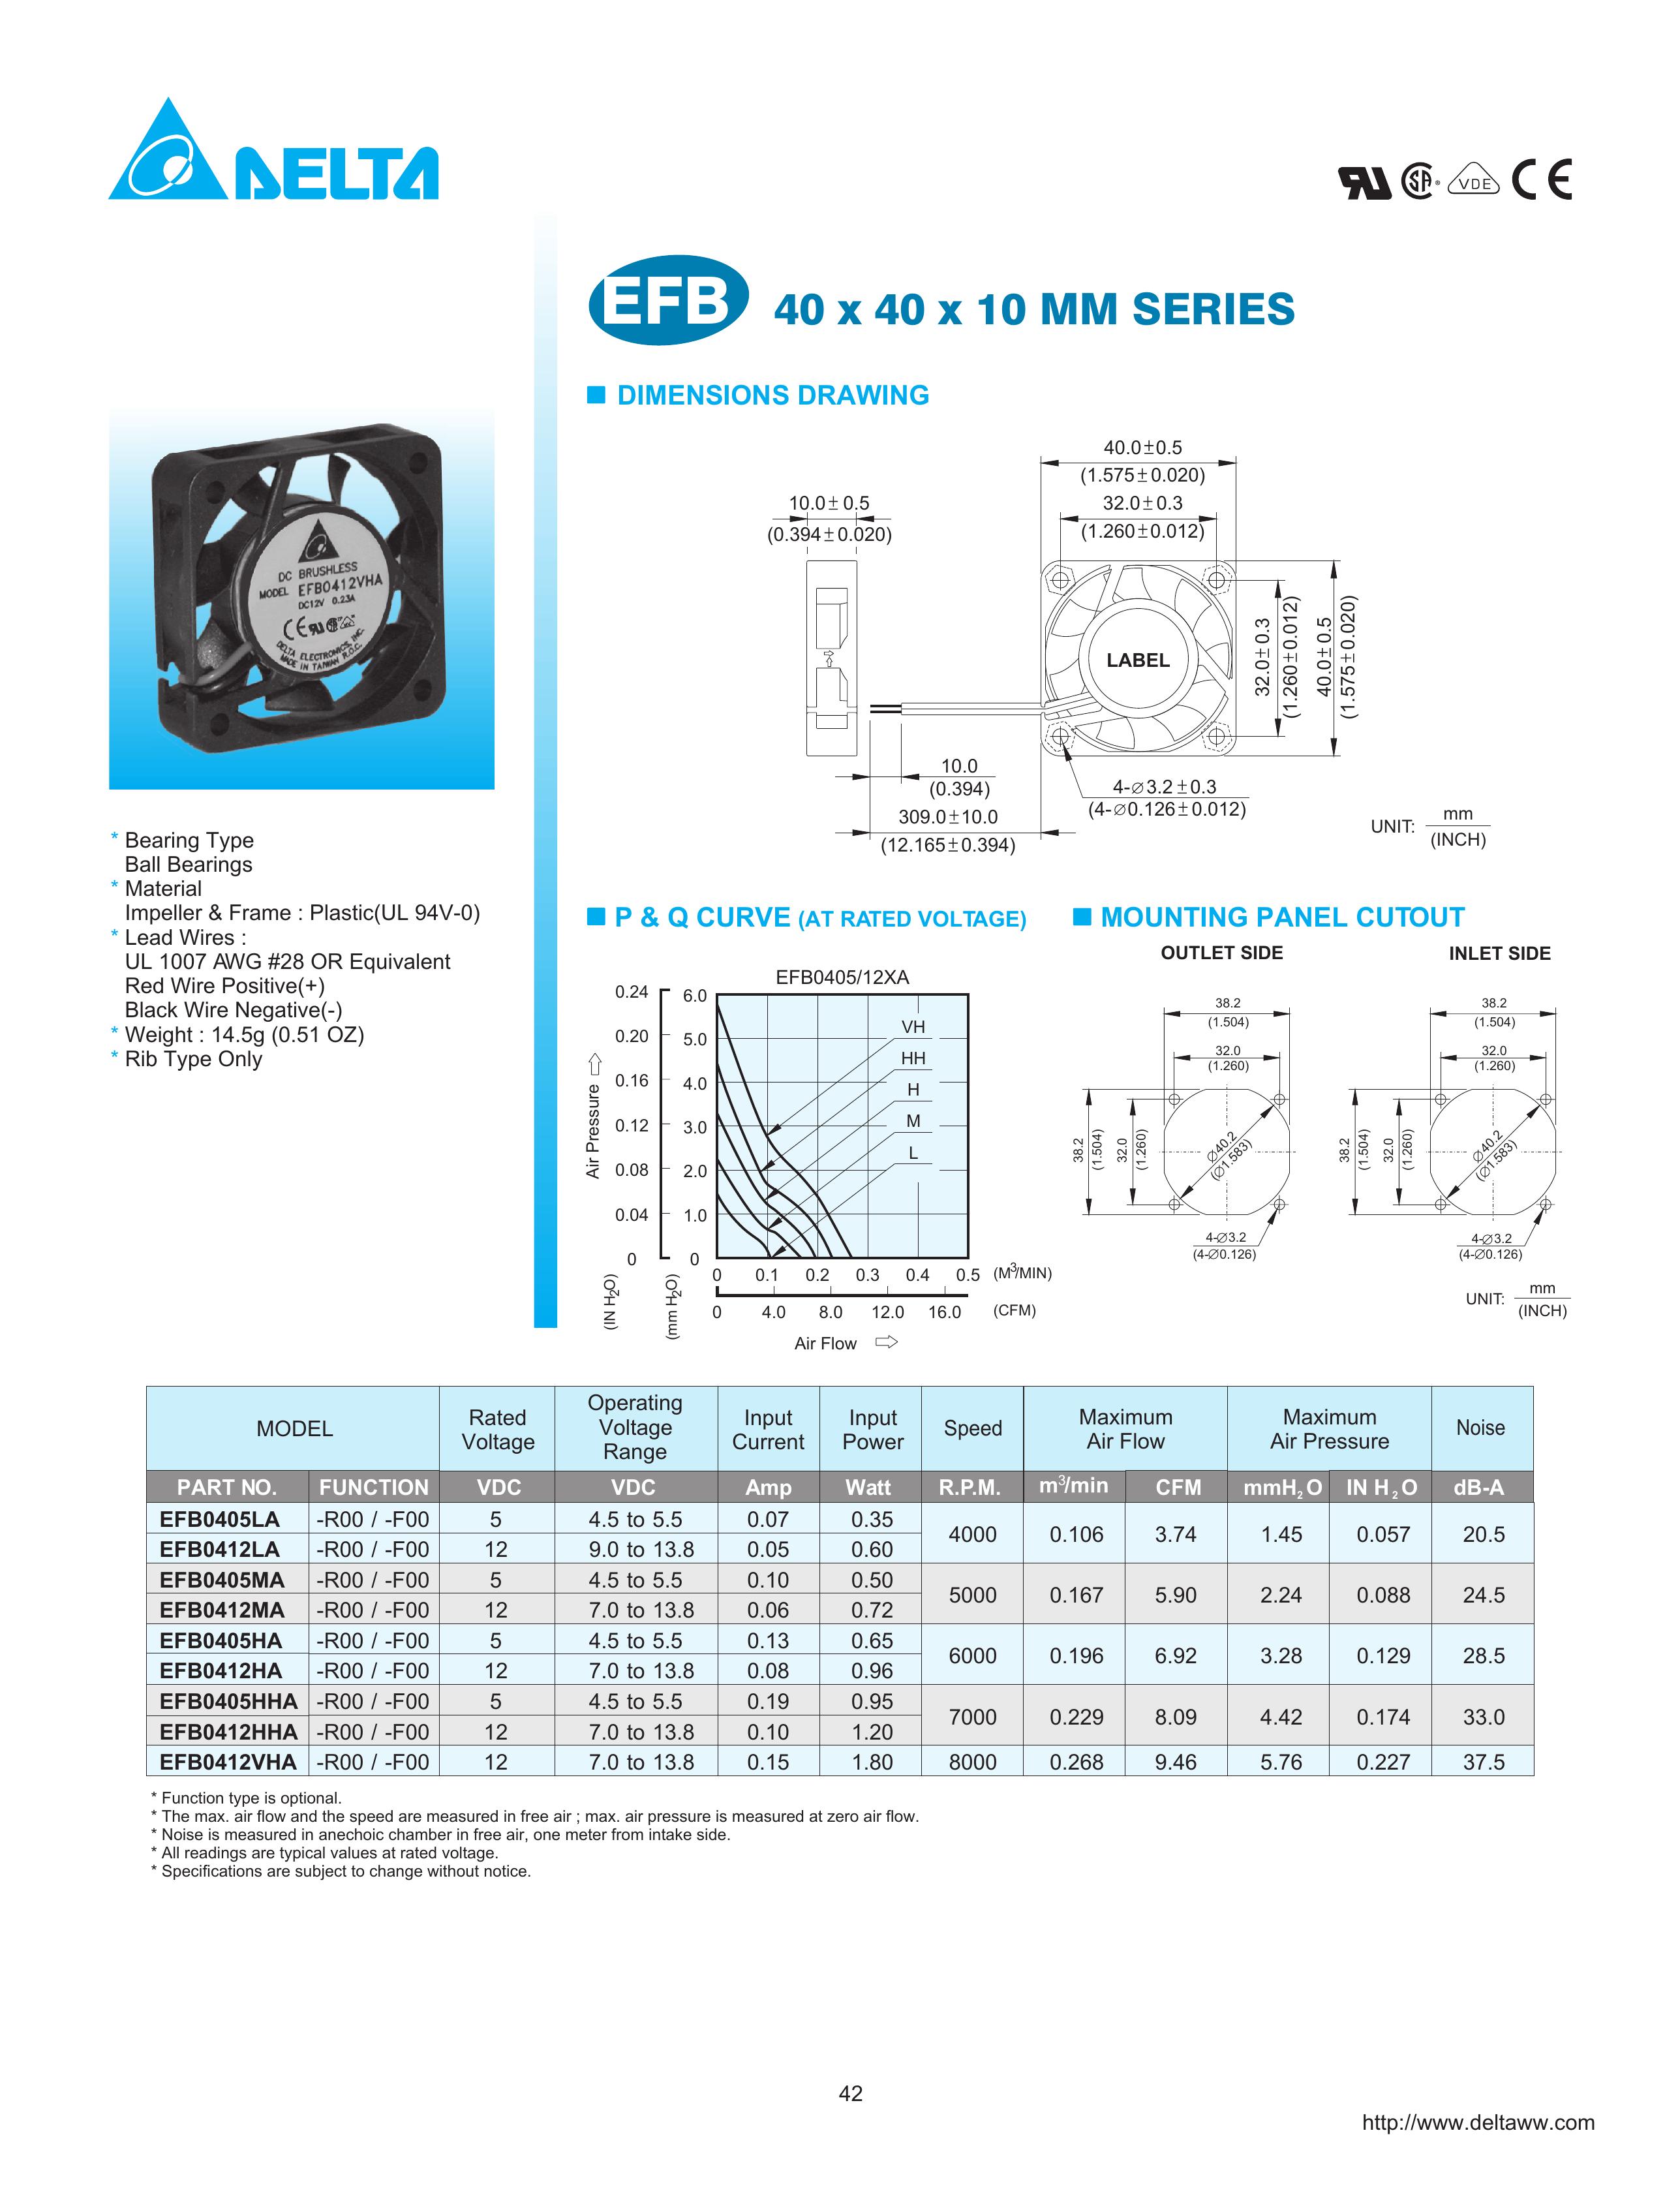 Delta EFB0412HHA Ventilation Hood User Manual